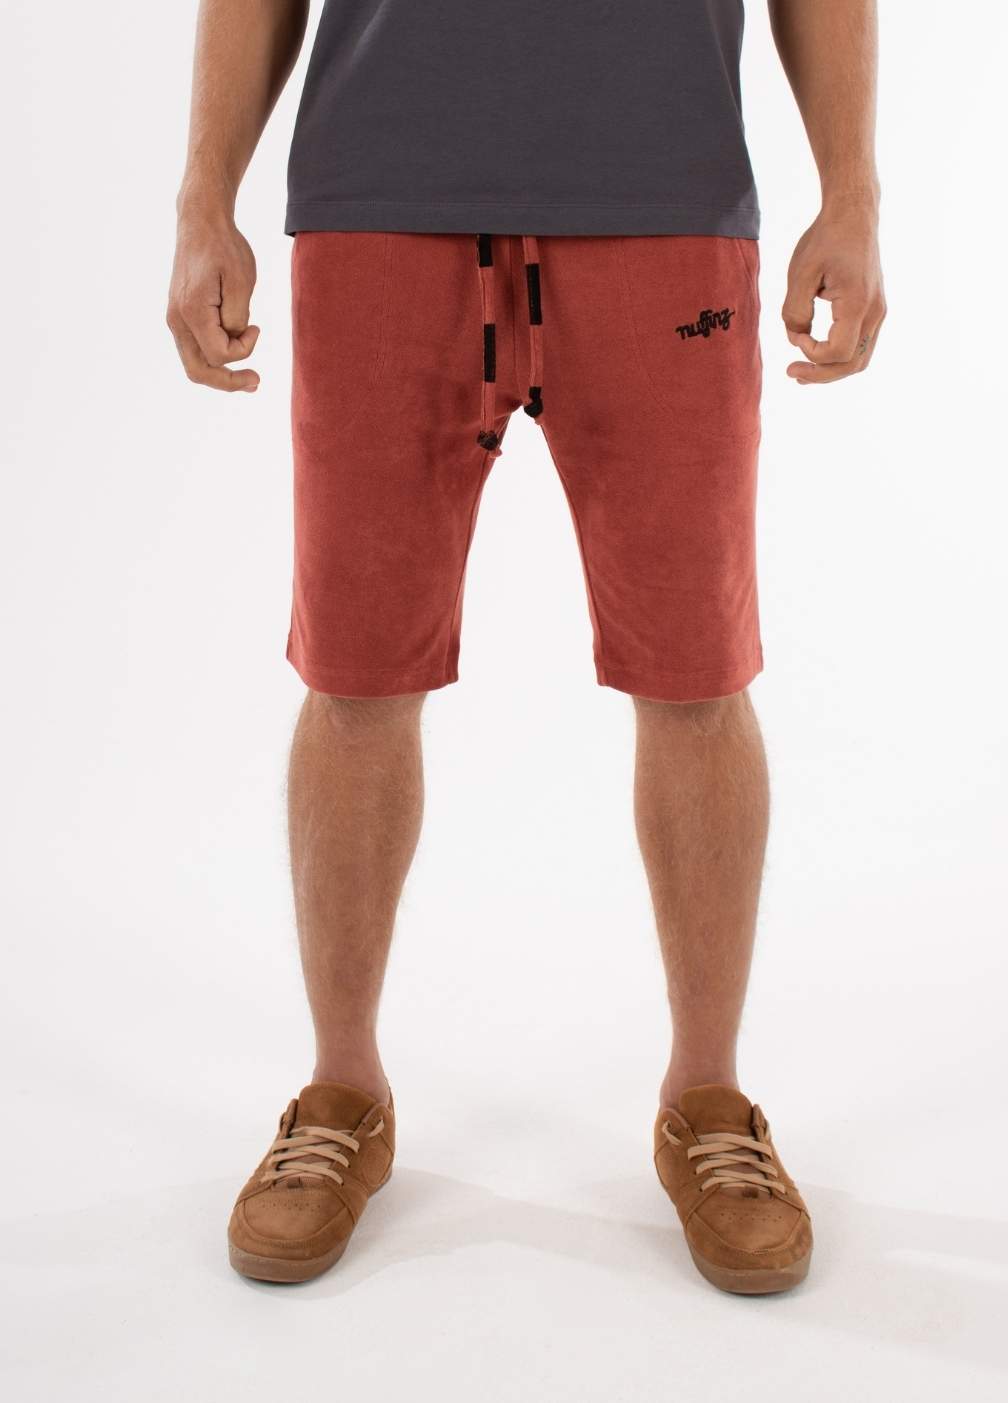 nuffinz shorts - TANDOORI SPICE TOWEL SHORTS - 100% organic cotton - terry cloth - comfortable shorts for men - closeup front